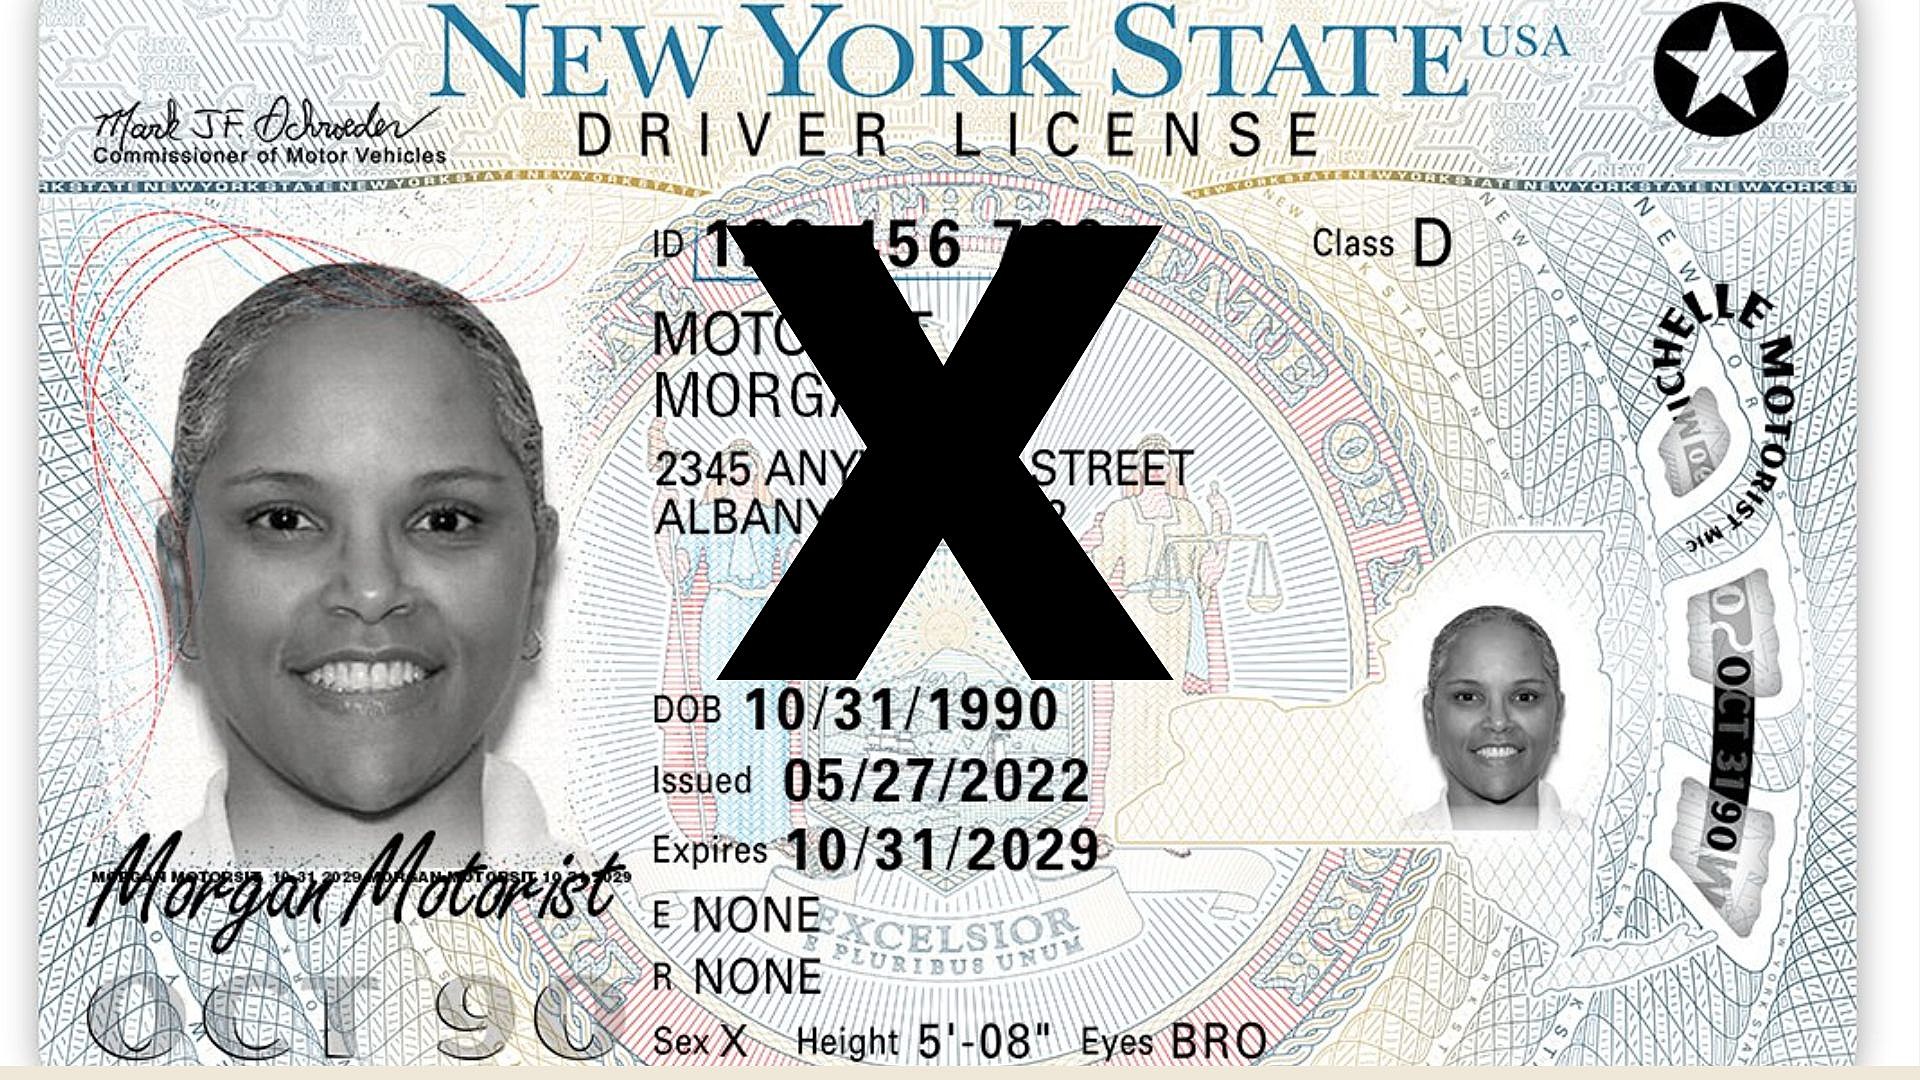 new york fake id